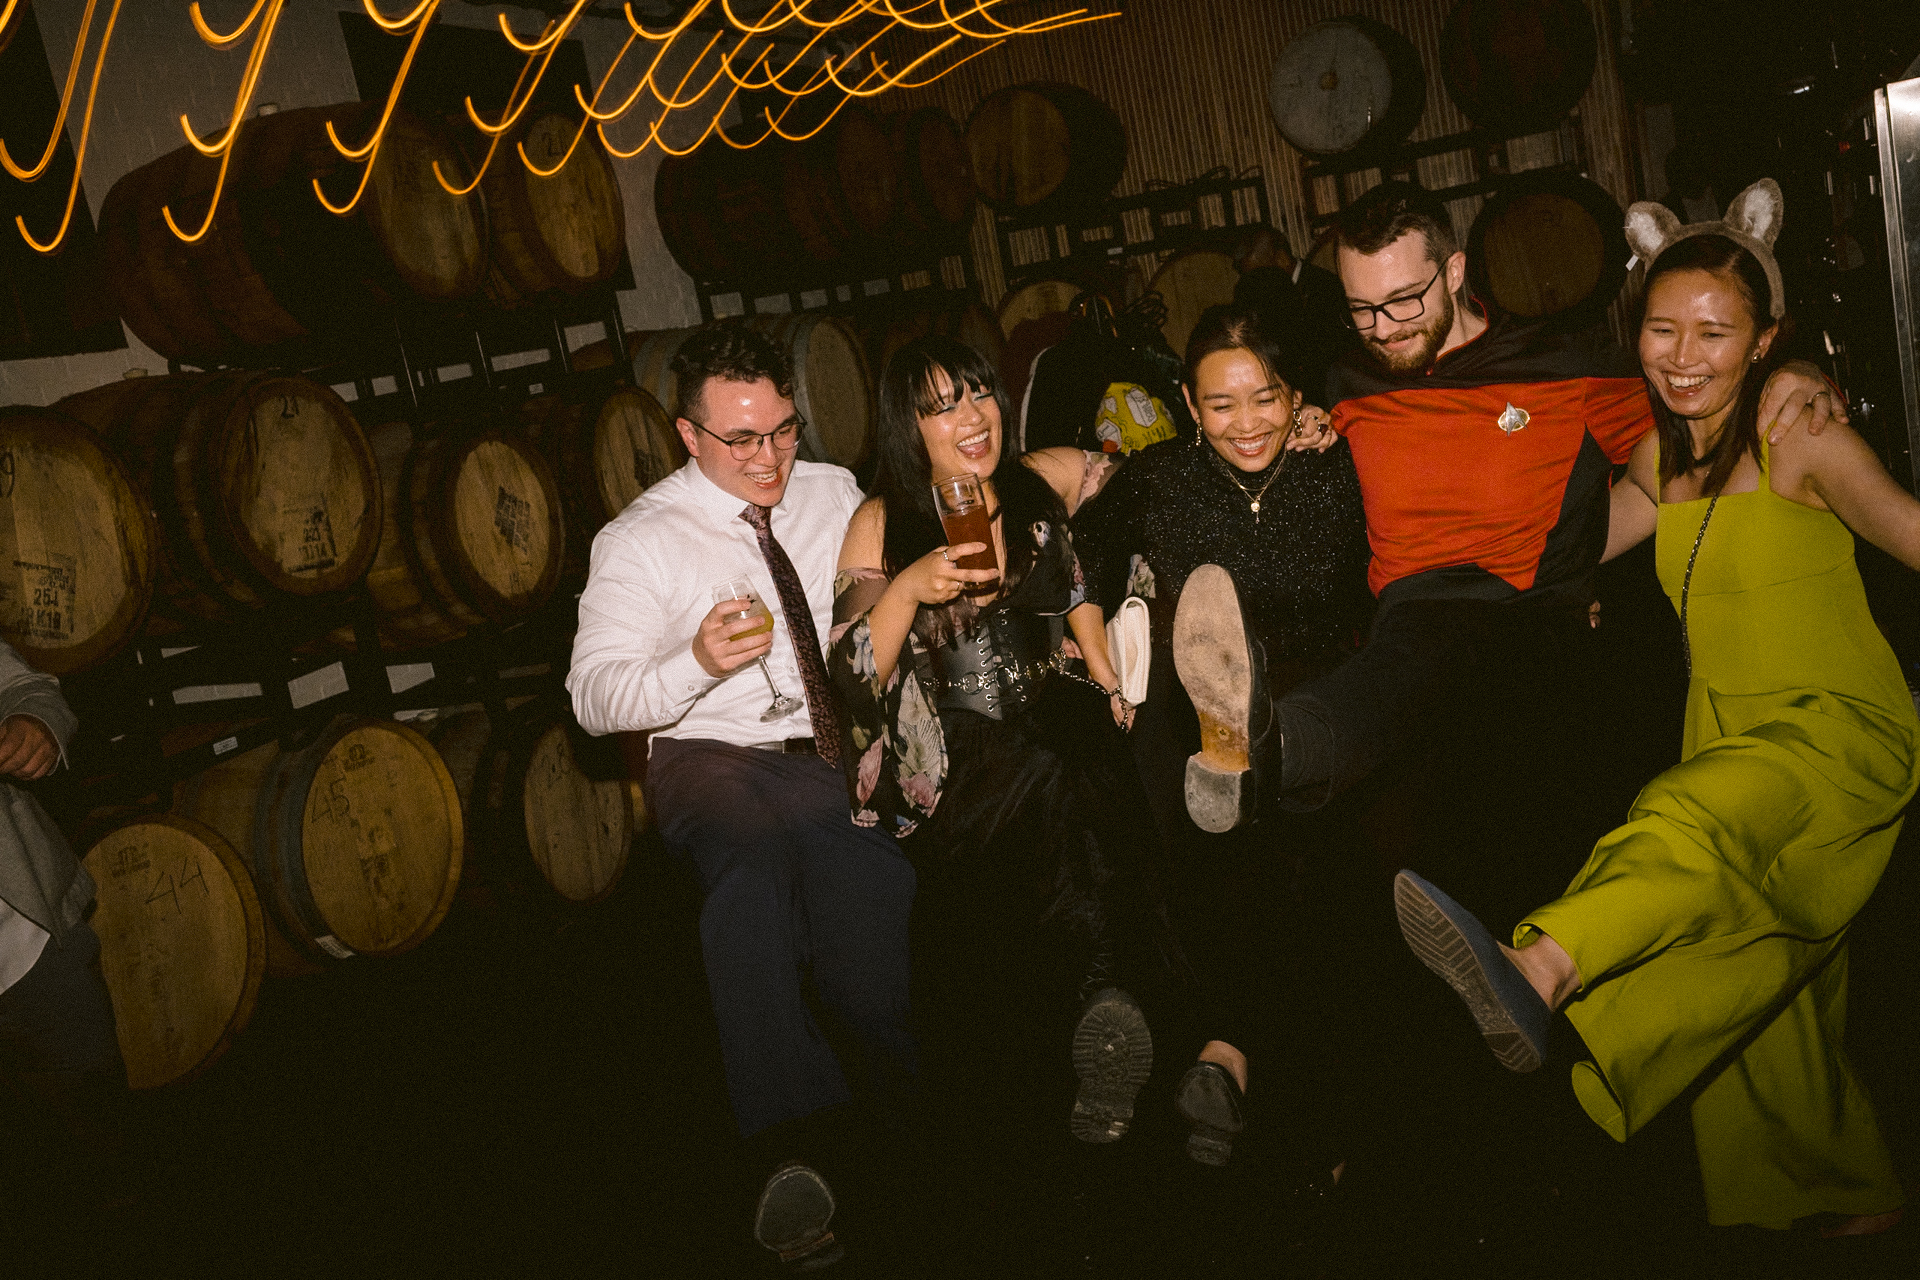 Guests danced happily at a micro-wedding at Bandit Brewery.